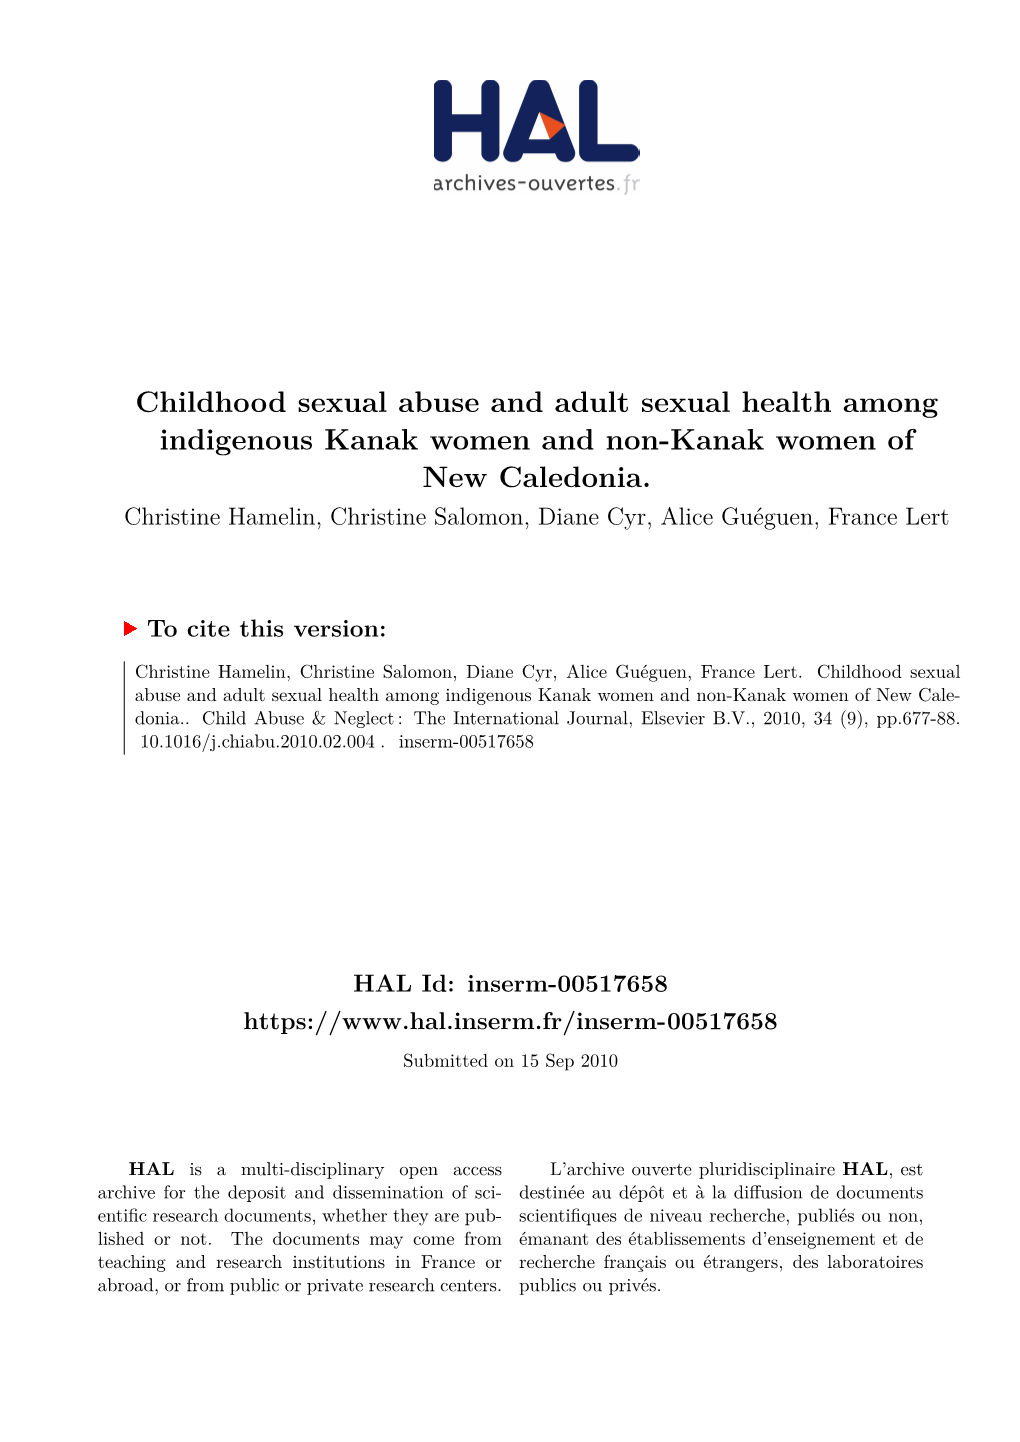 Childhood Sexual Abuse and Adult Sexual Health Among Indigenous Kanak Women and Non-Kanak Women of New Caledonia